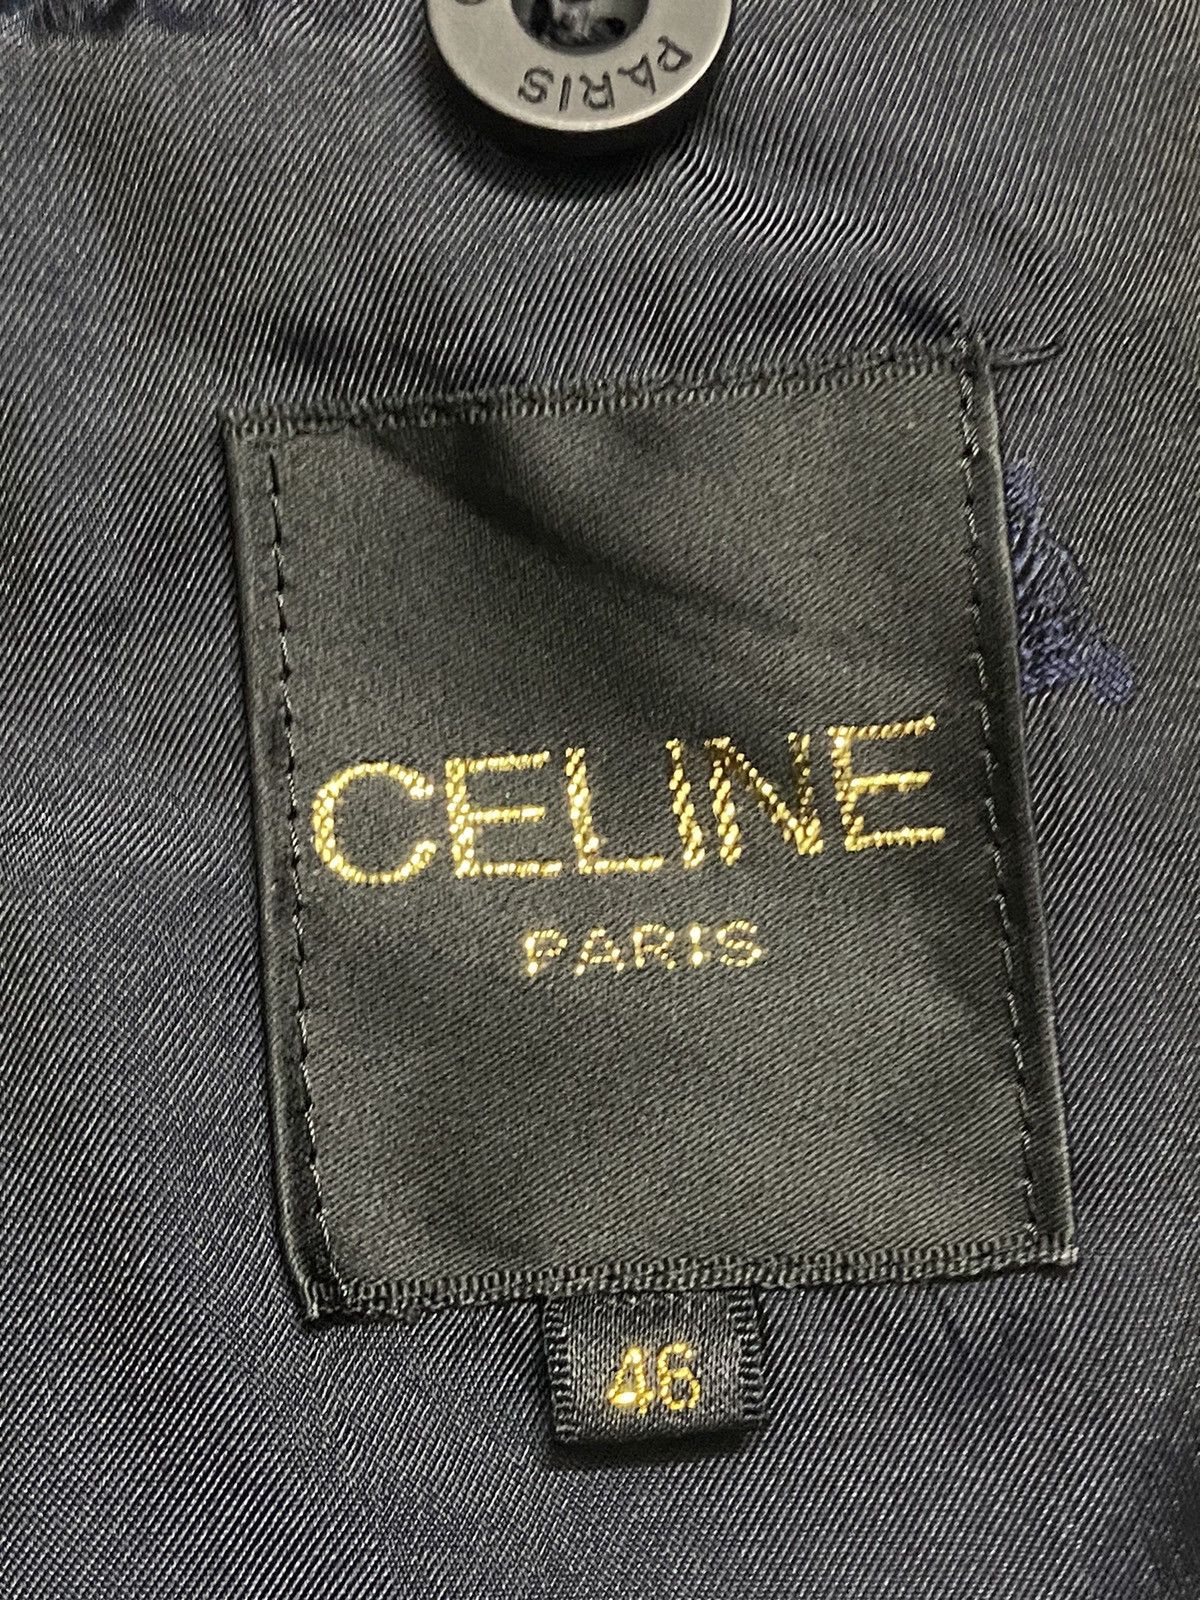 Celine Paris Oversized Jacket - 5